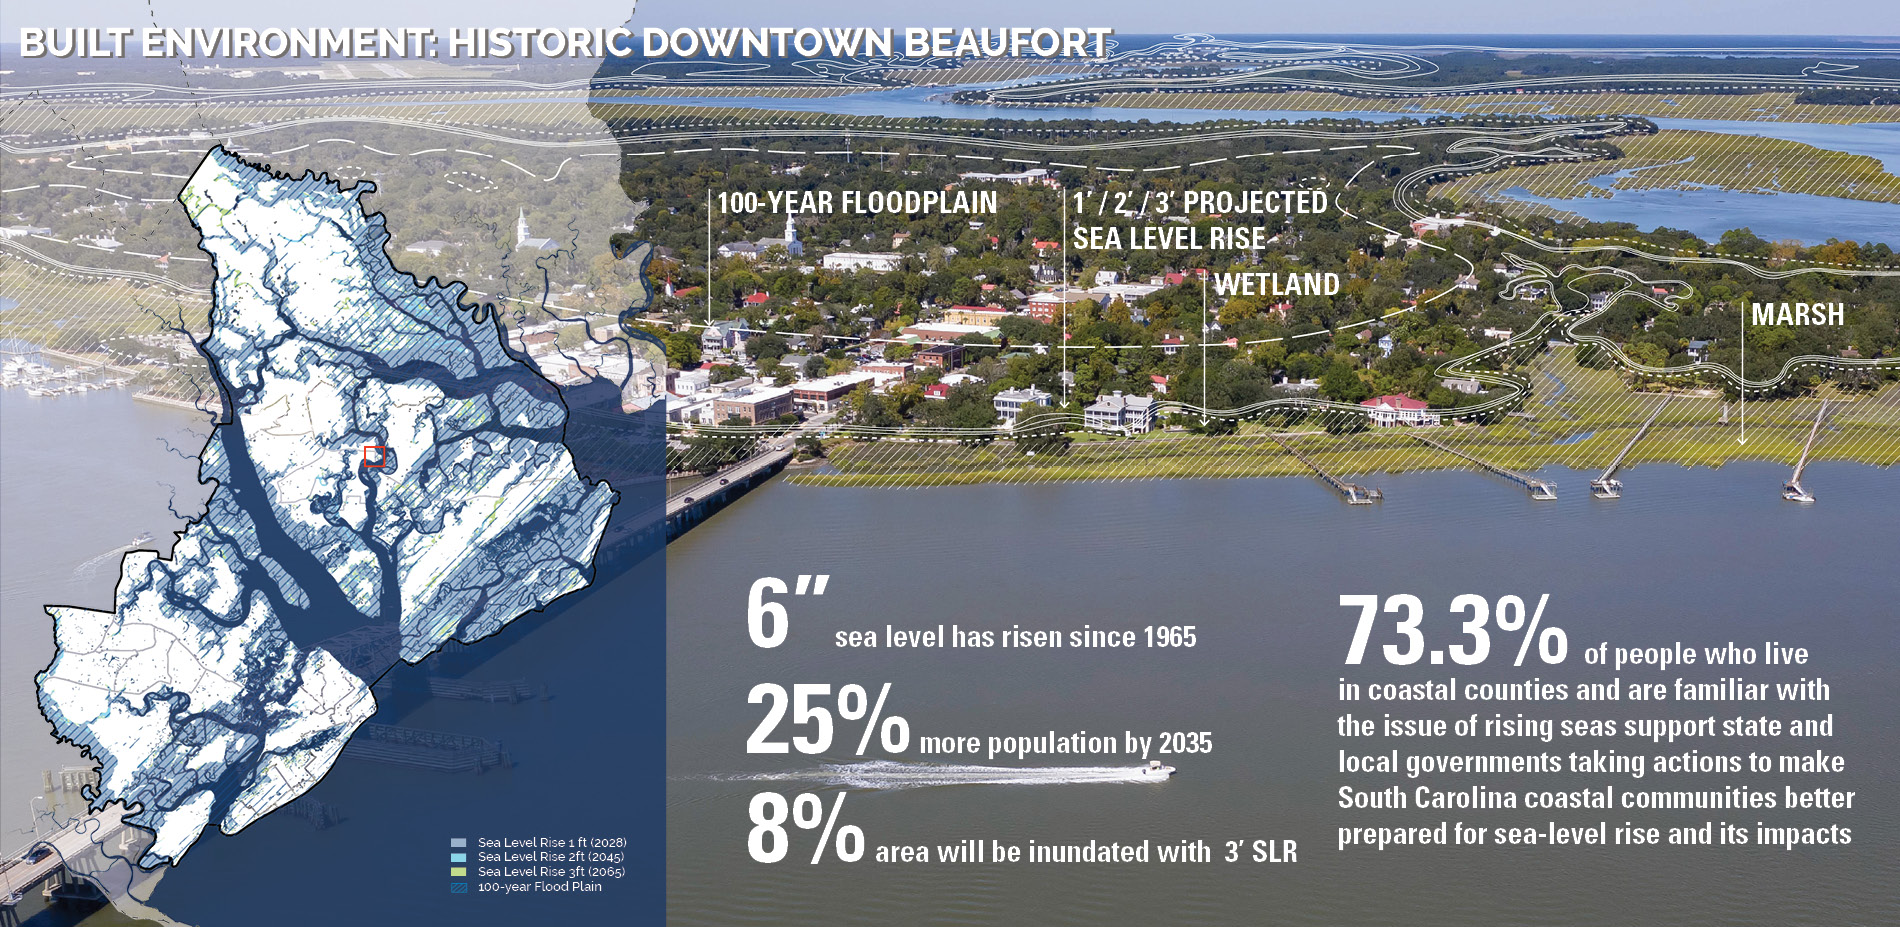 Built Environment: Historic Downtown Beaufort